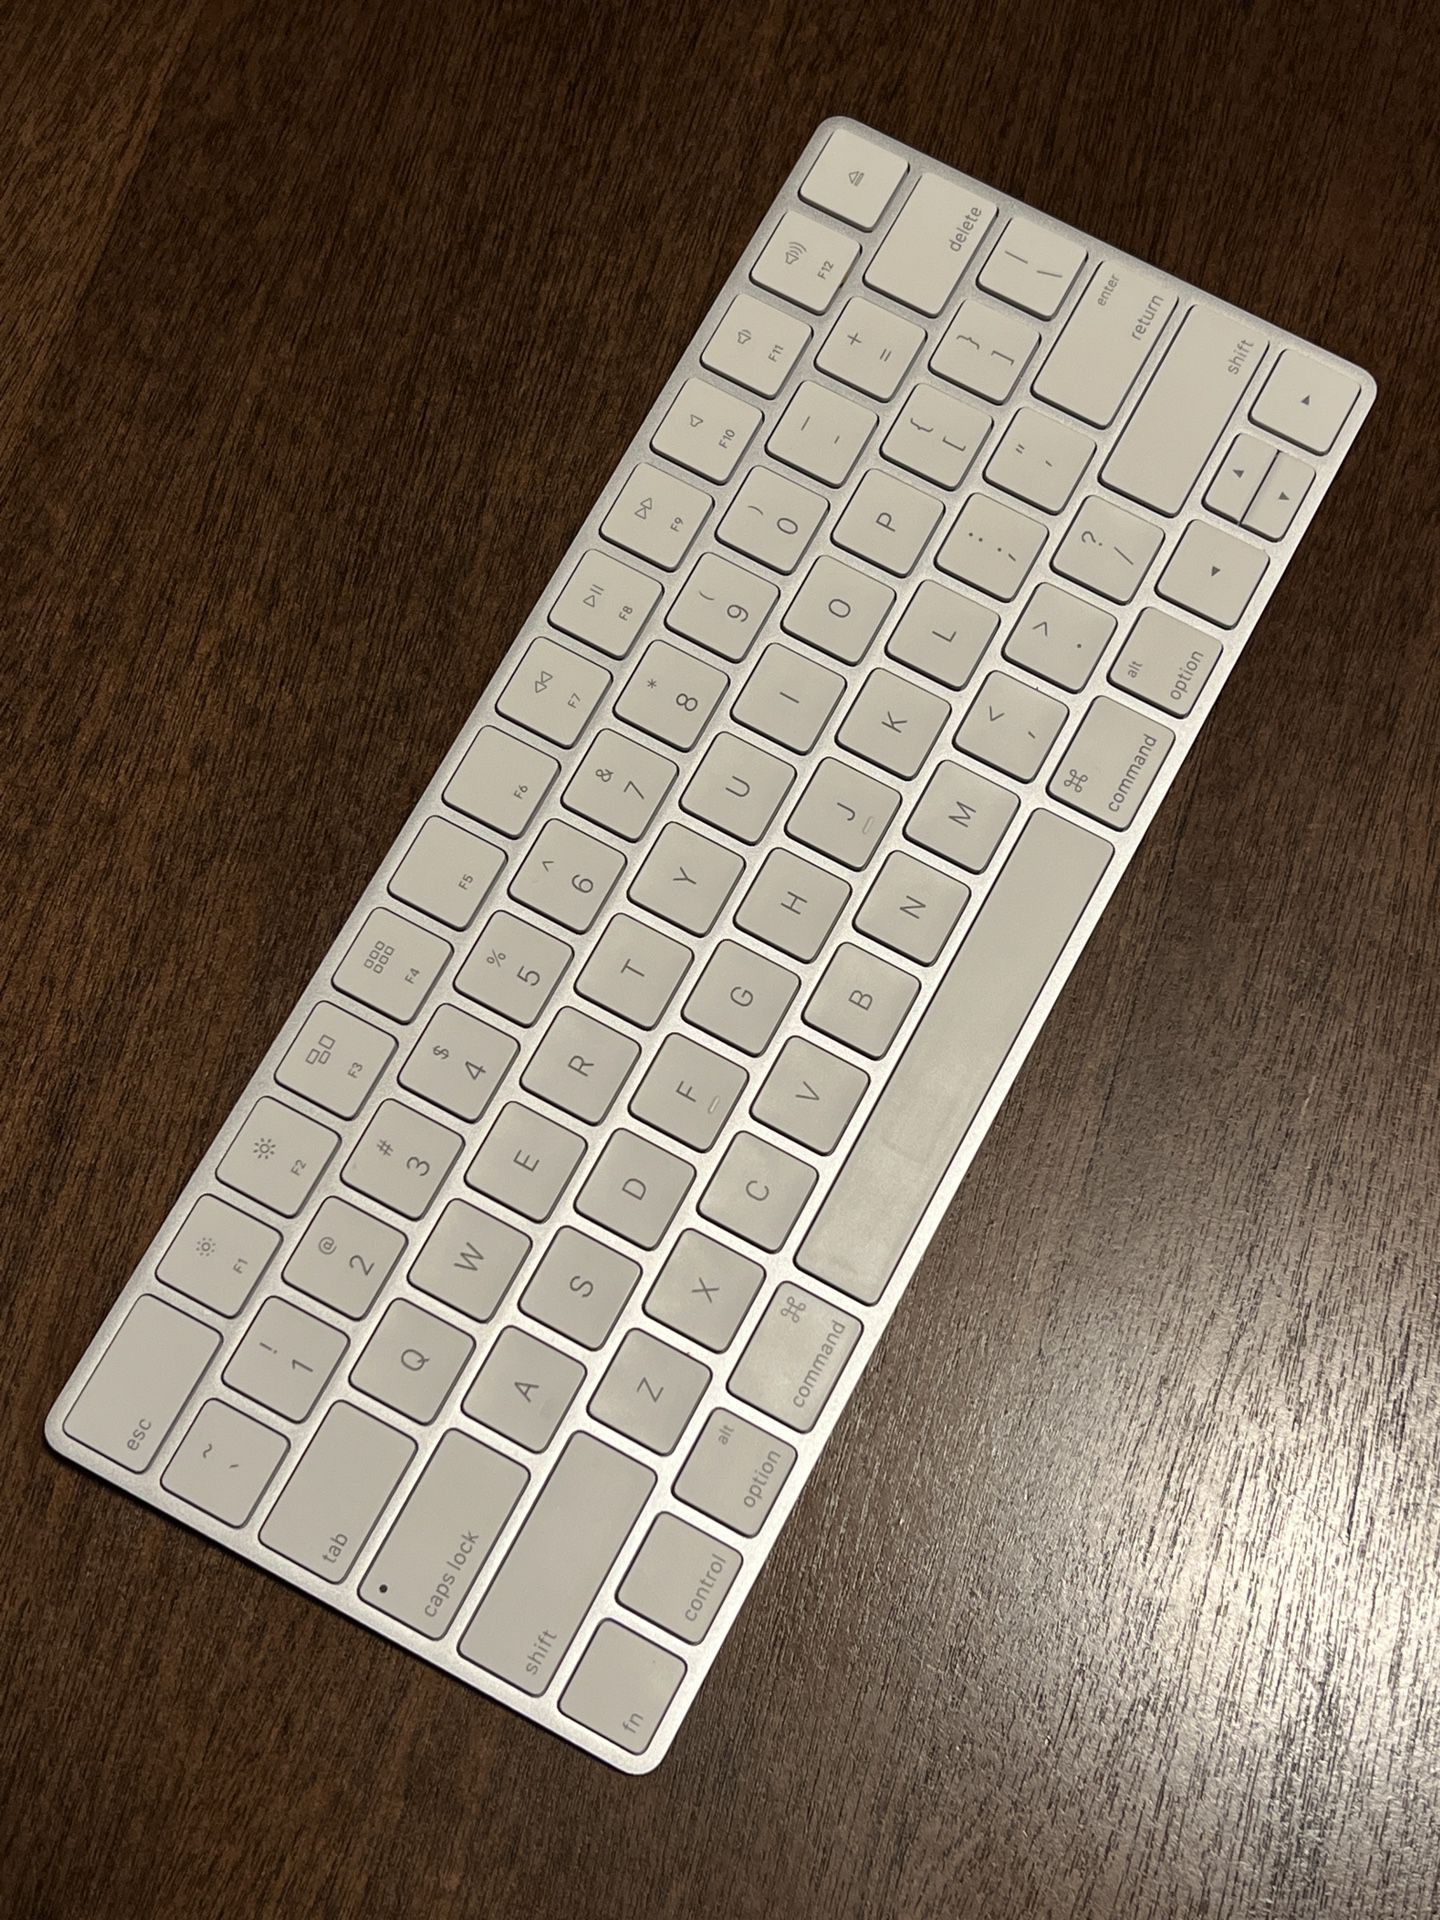 Apple 🍎 Magic Keyboard 2 - like new condition 💰 original $99